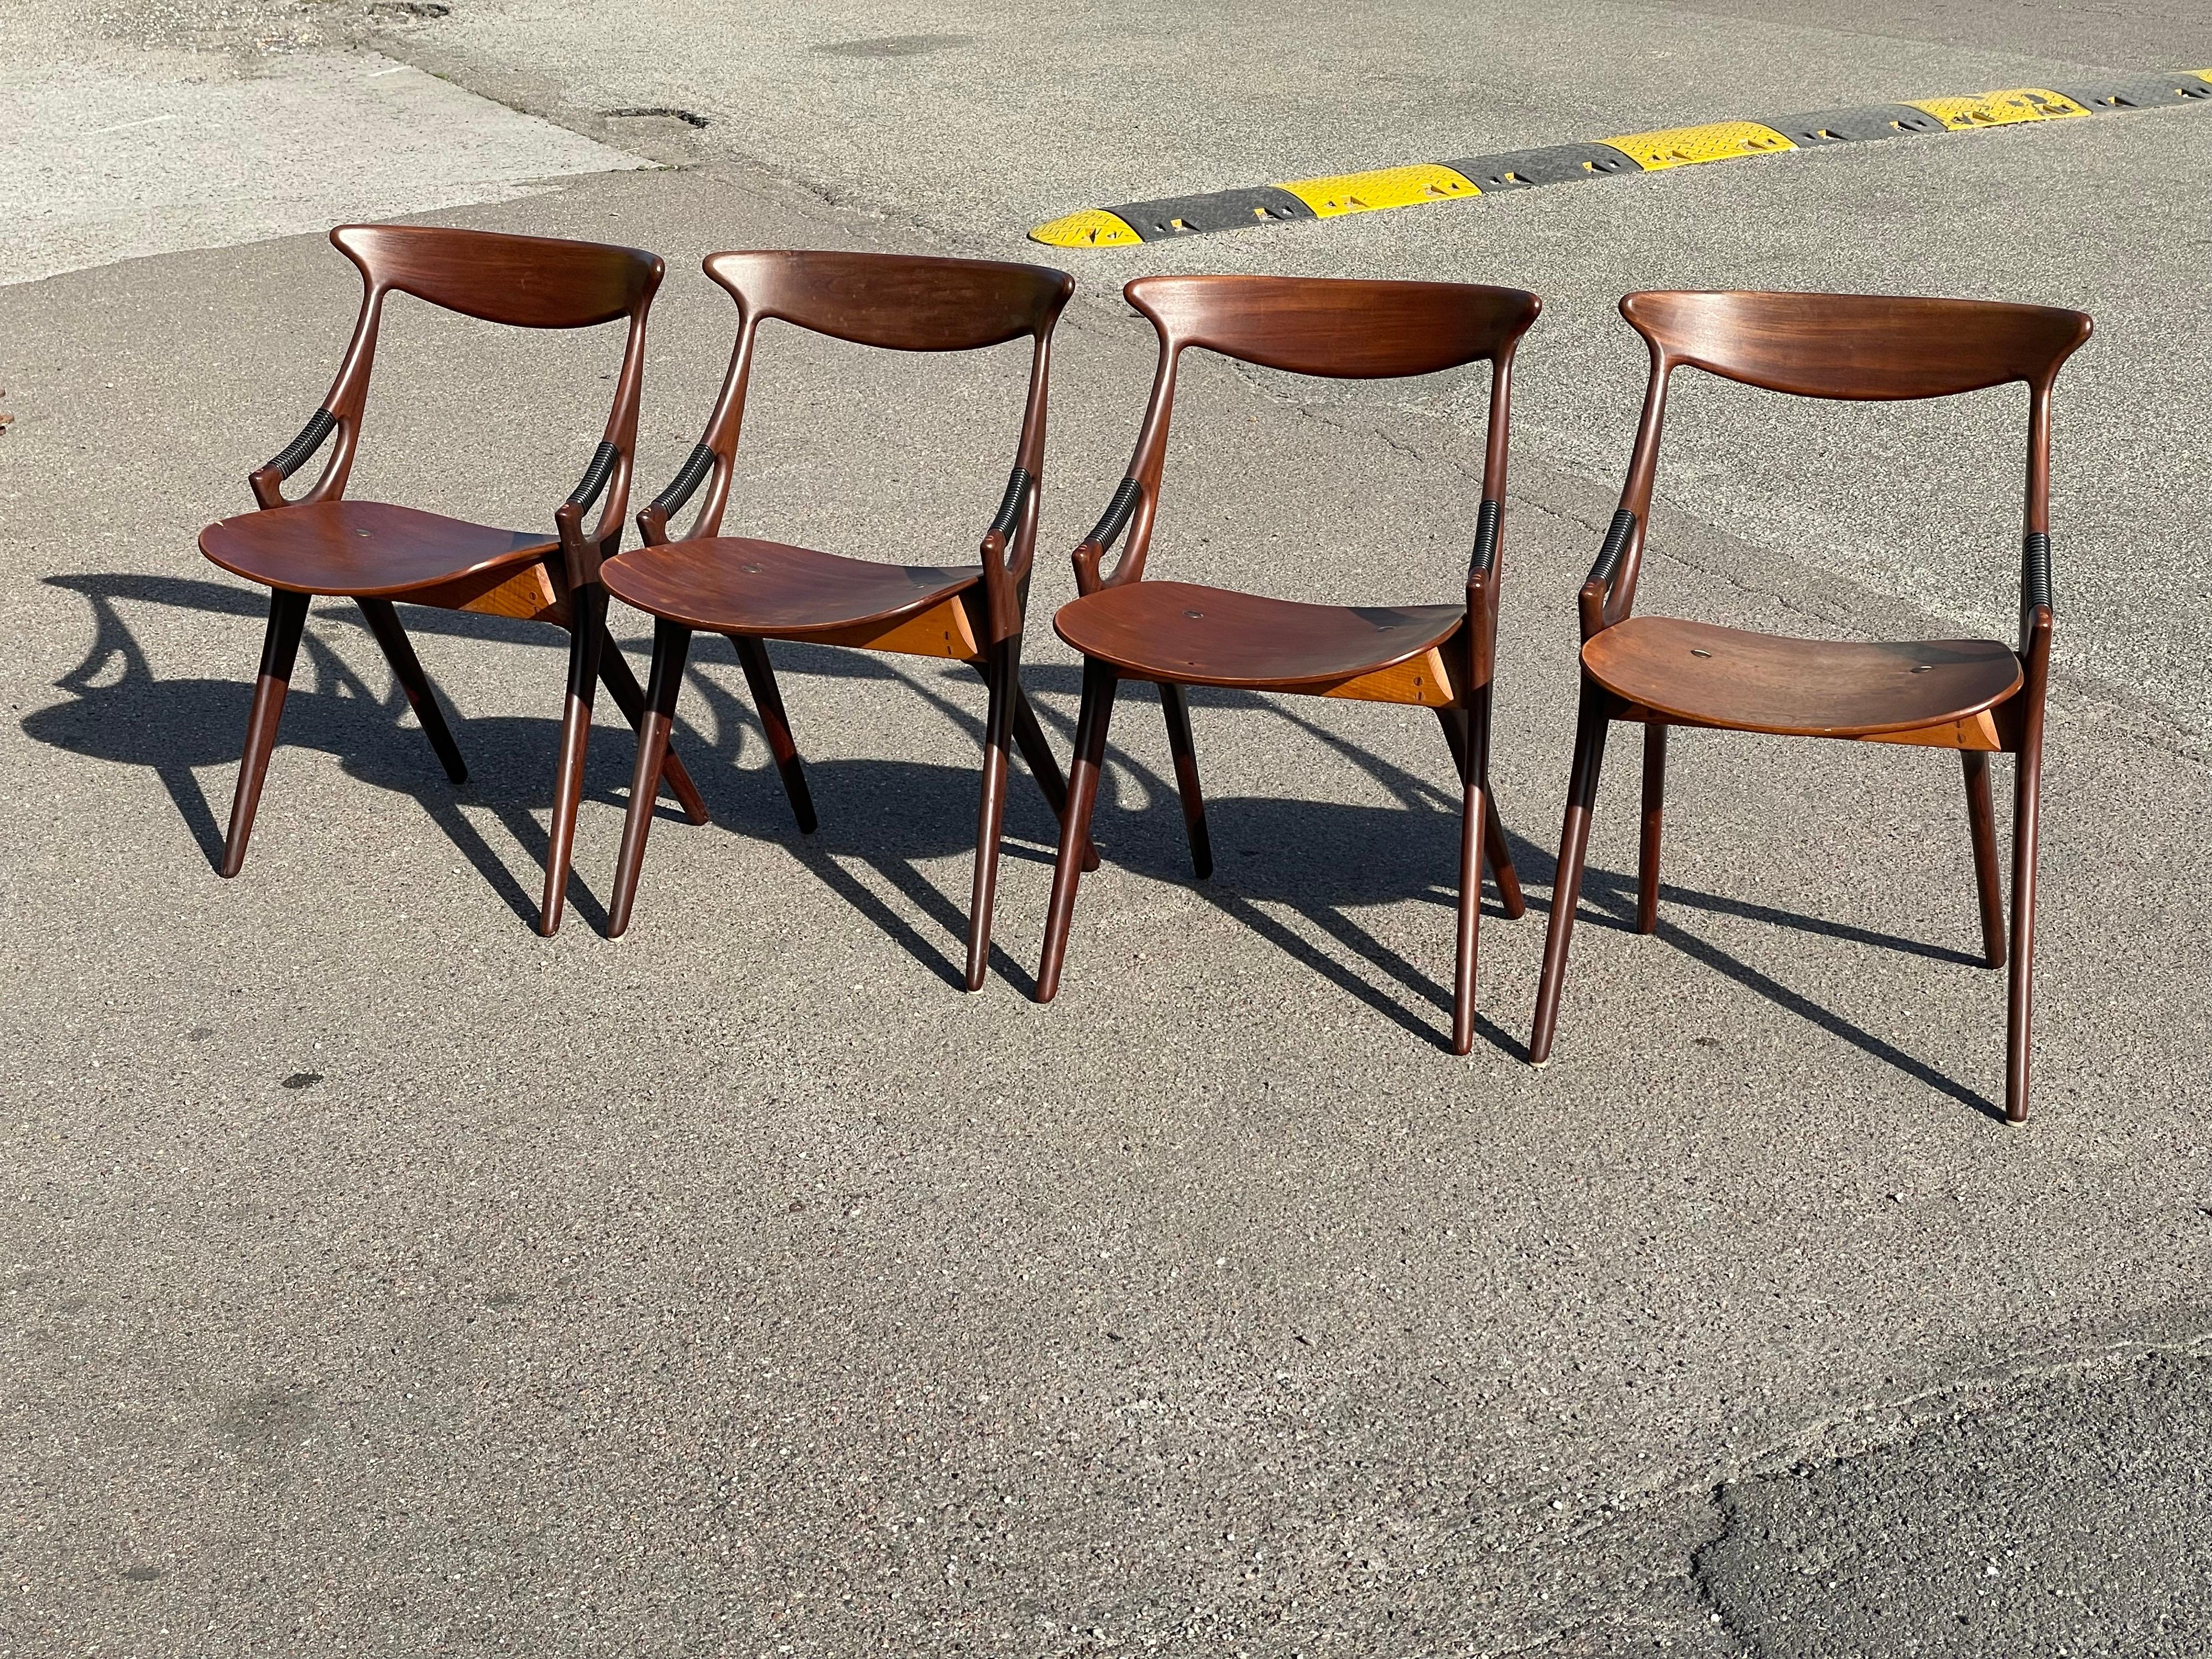 Sculptural Mid-Century Modern dining chairs designed by Arne Hovmand-Olsen for Mogens Kold Møbelfabrik.